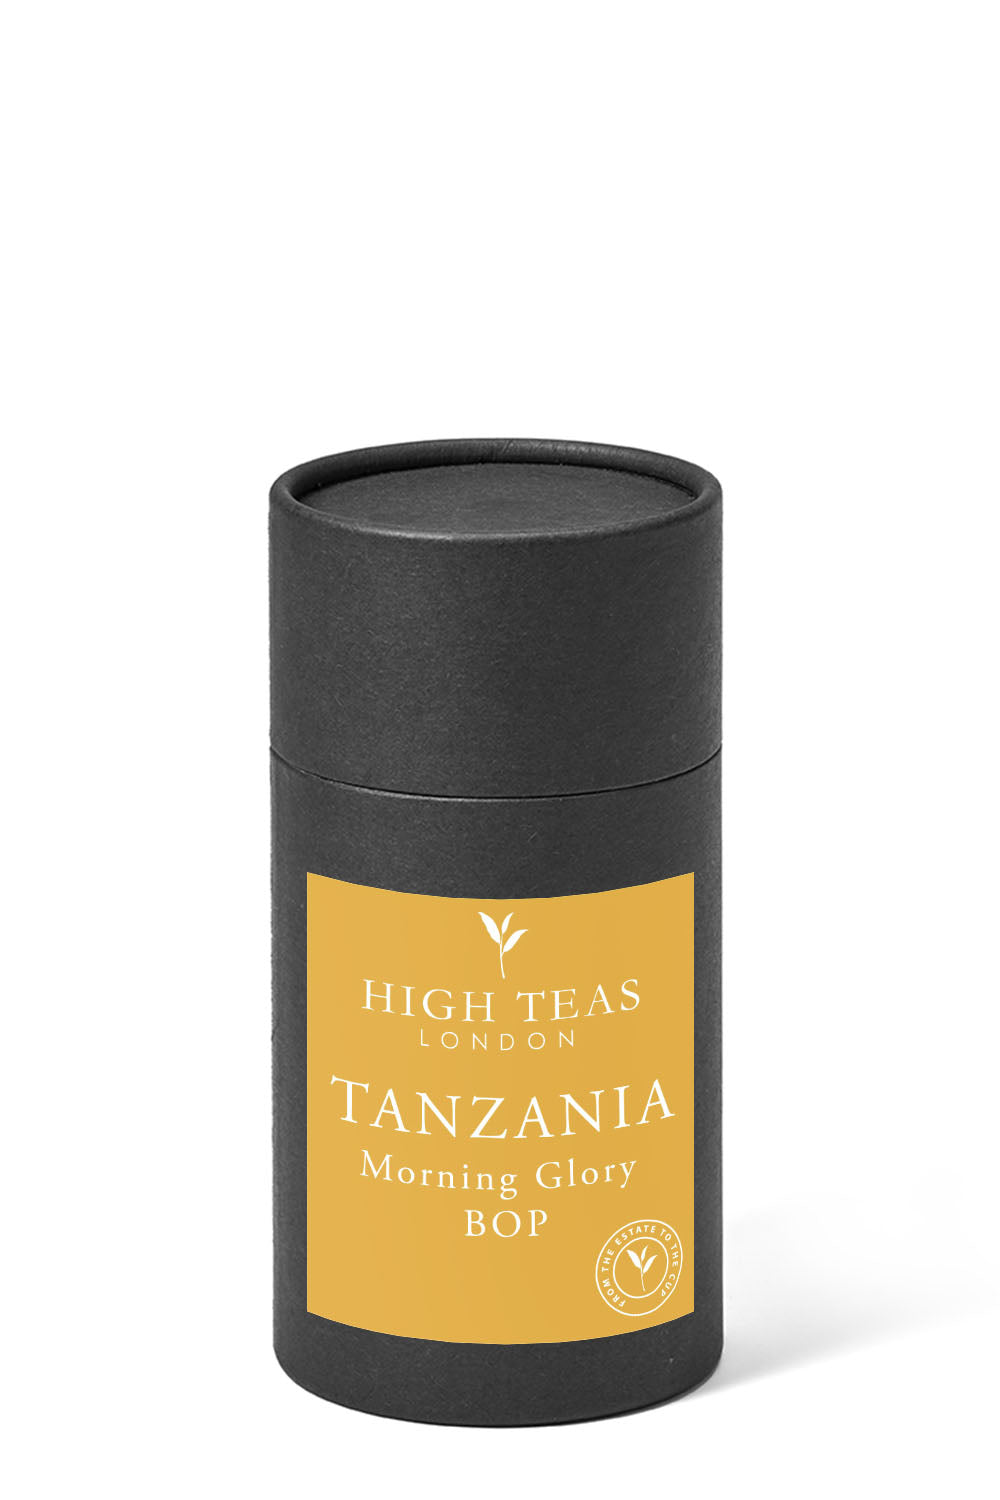 Tanzania BOP (CTC) - "Morning Glory"-60g gift-Loose Leaf Tea-High Teas